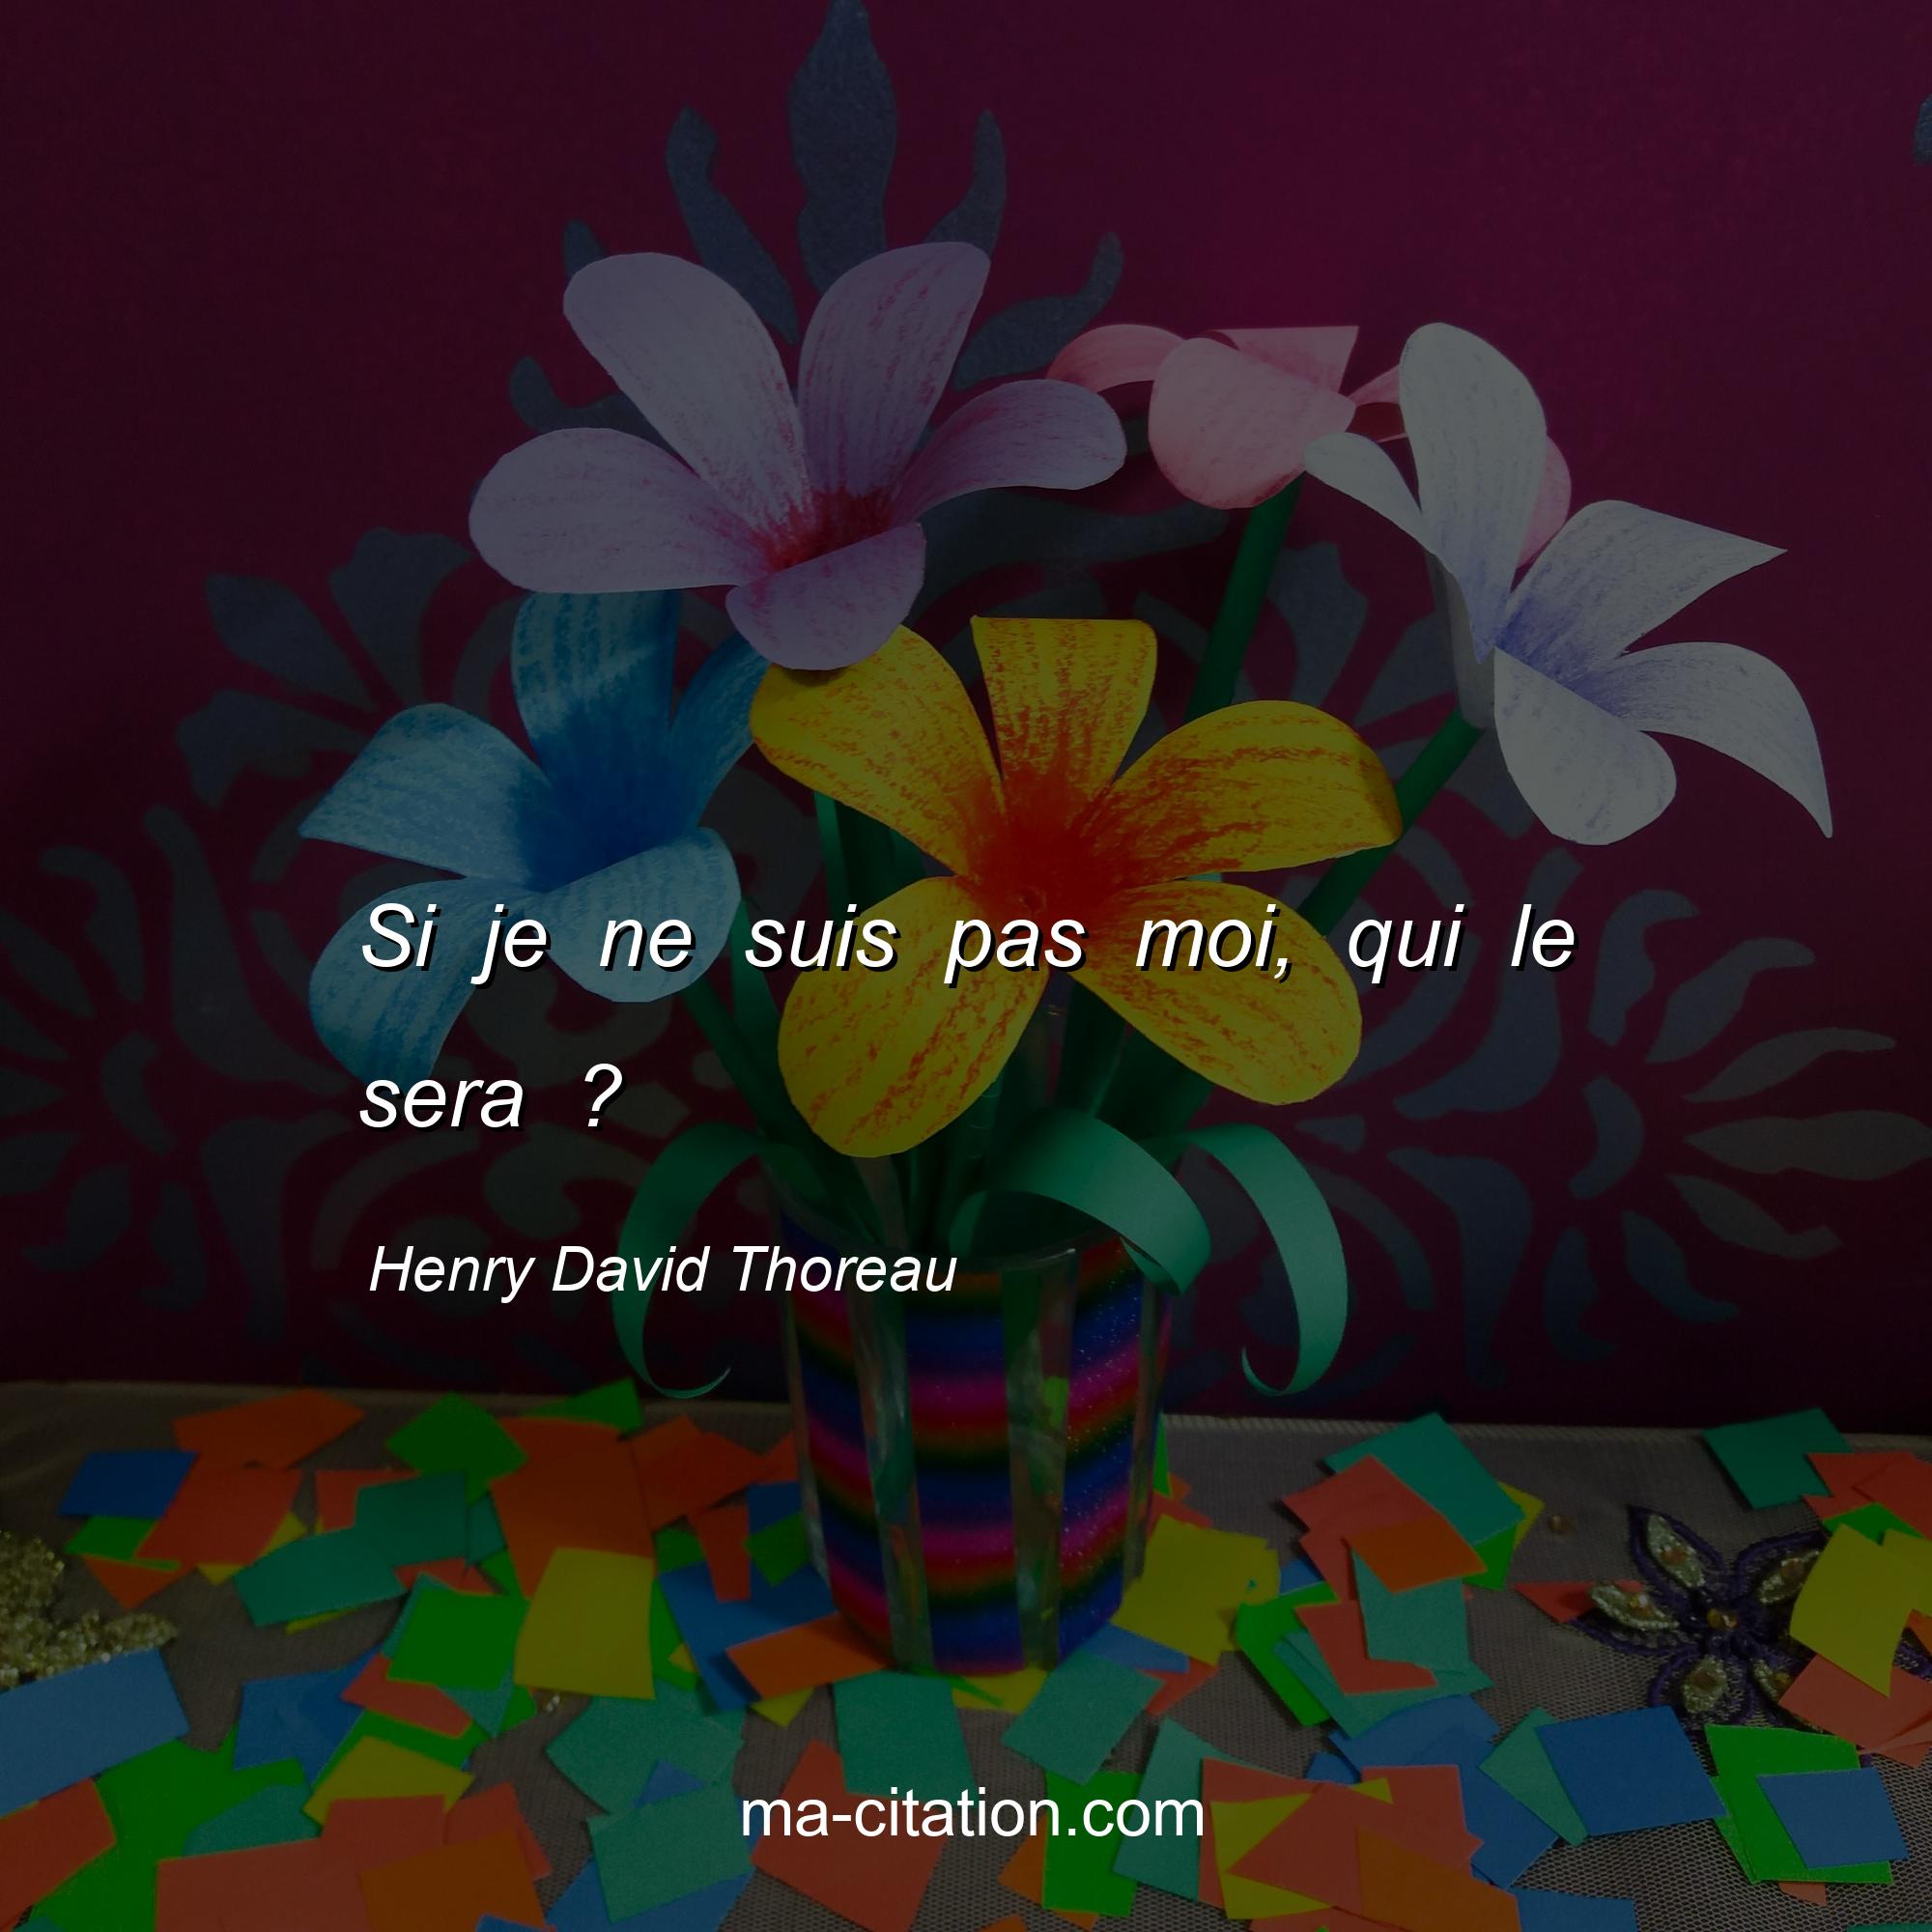 Henry David Thoreau : Si je ne suis pas moi, qui le sera ?